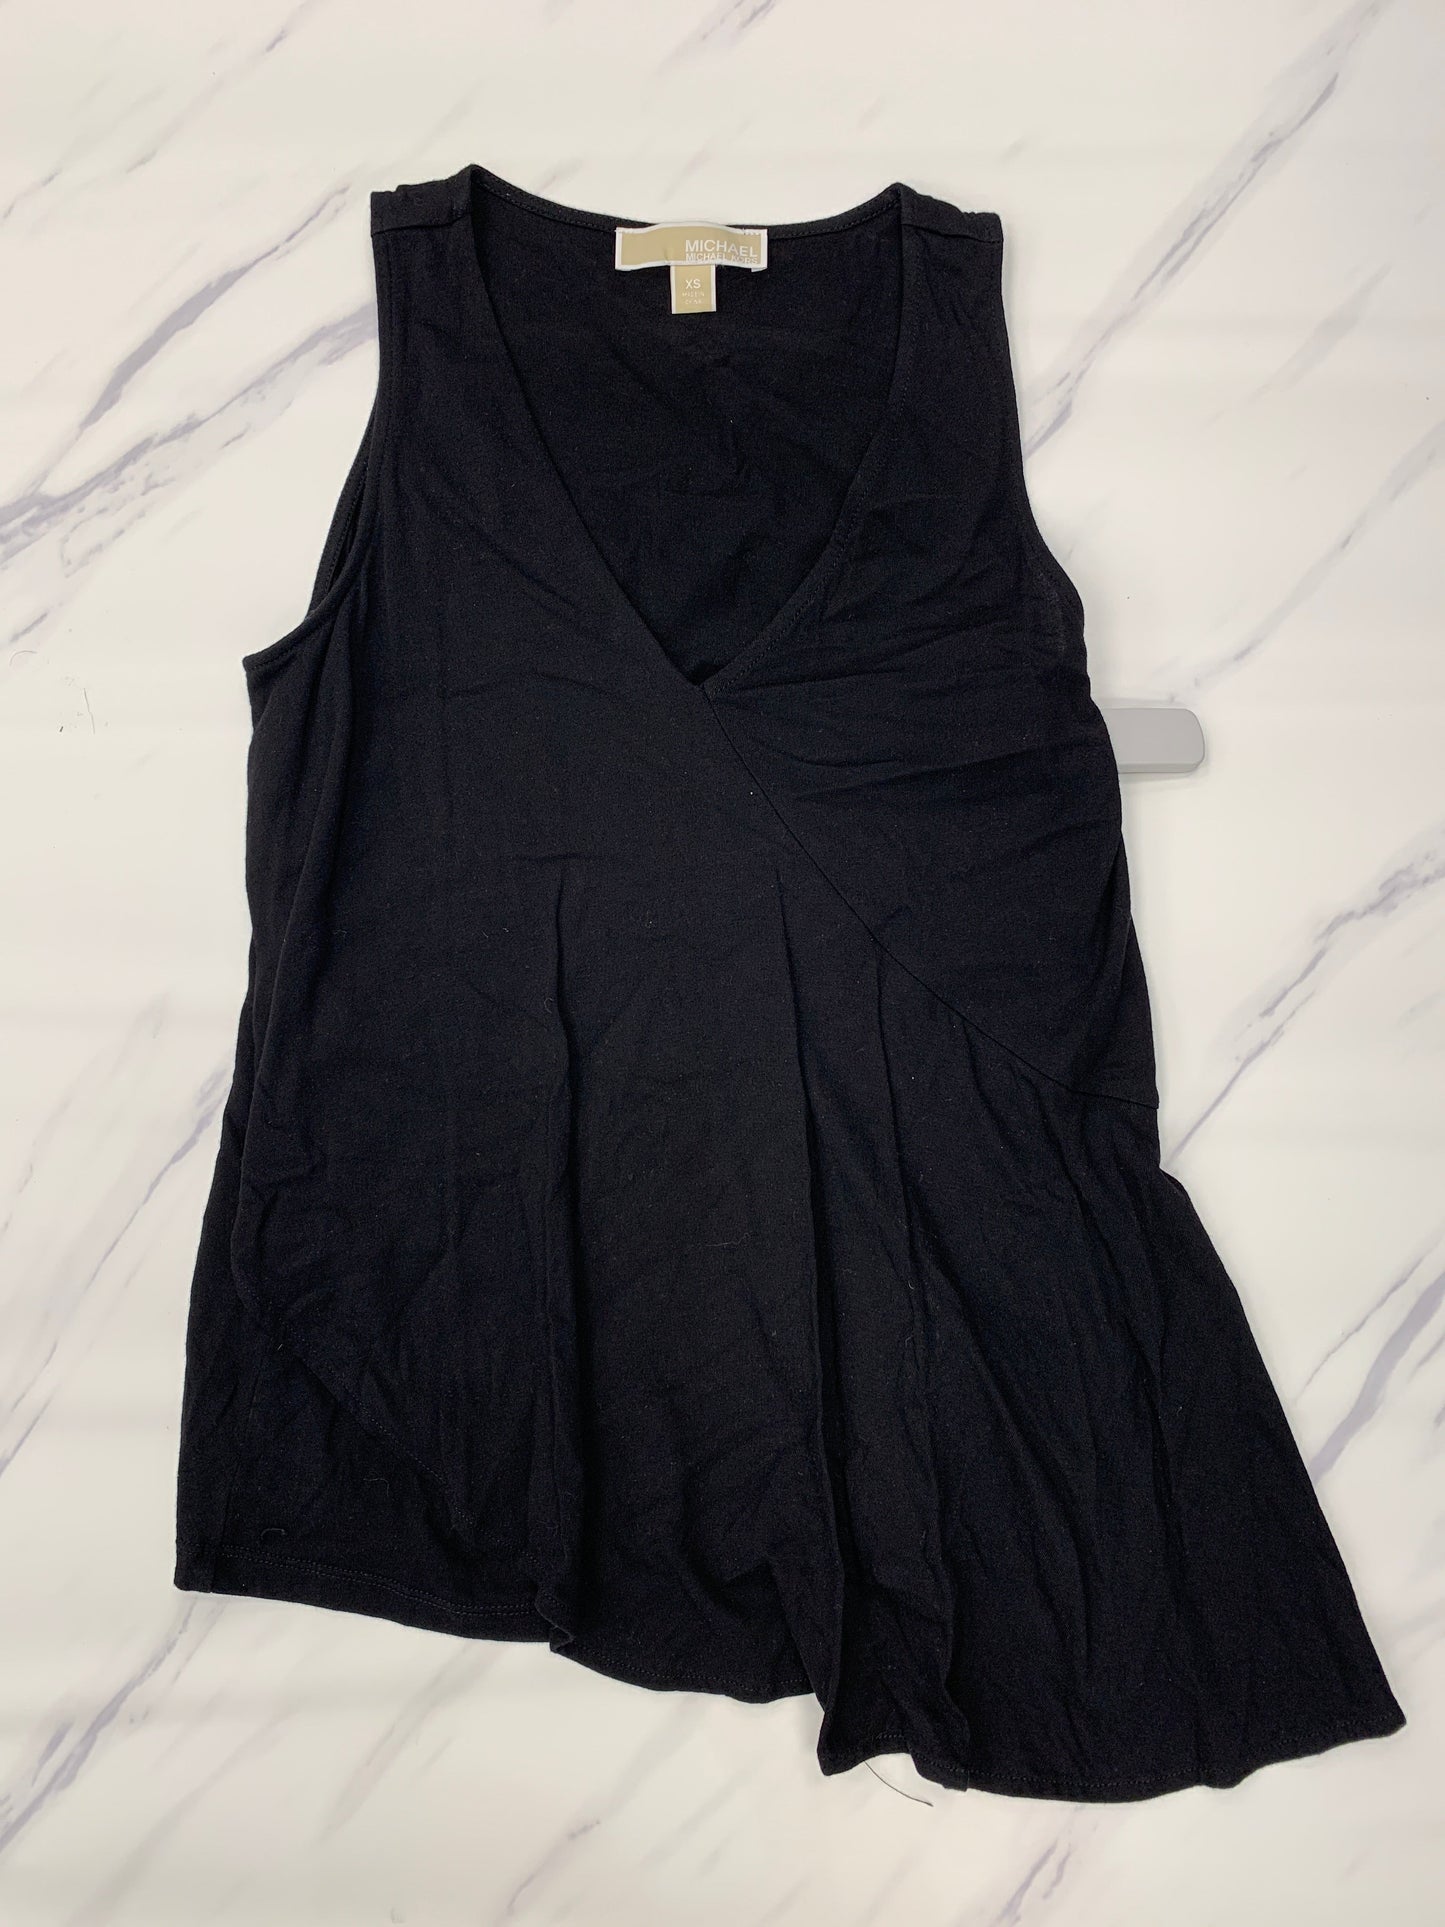 Black Top Sleeveless Designer Michael By Michael Kors, Size Xs